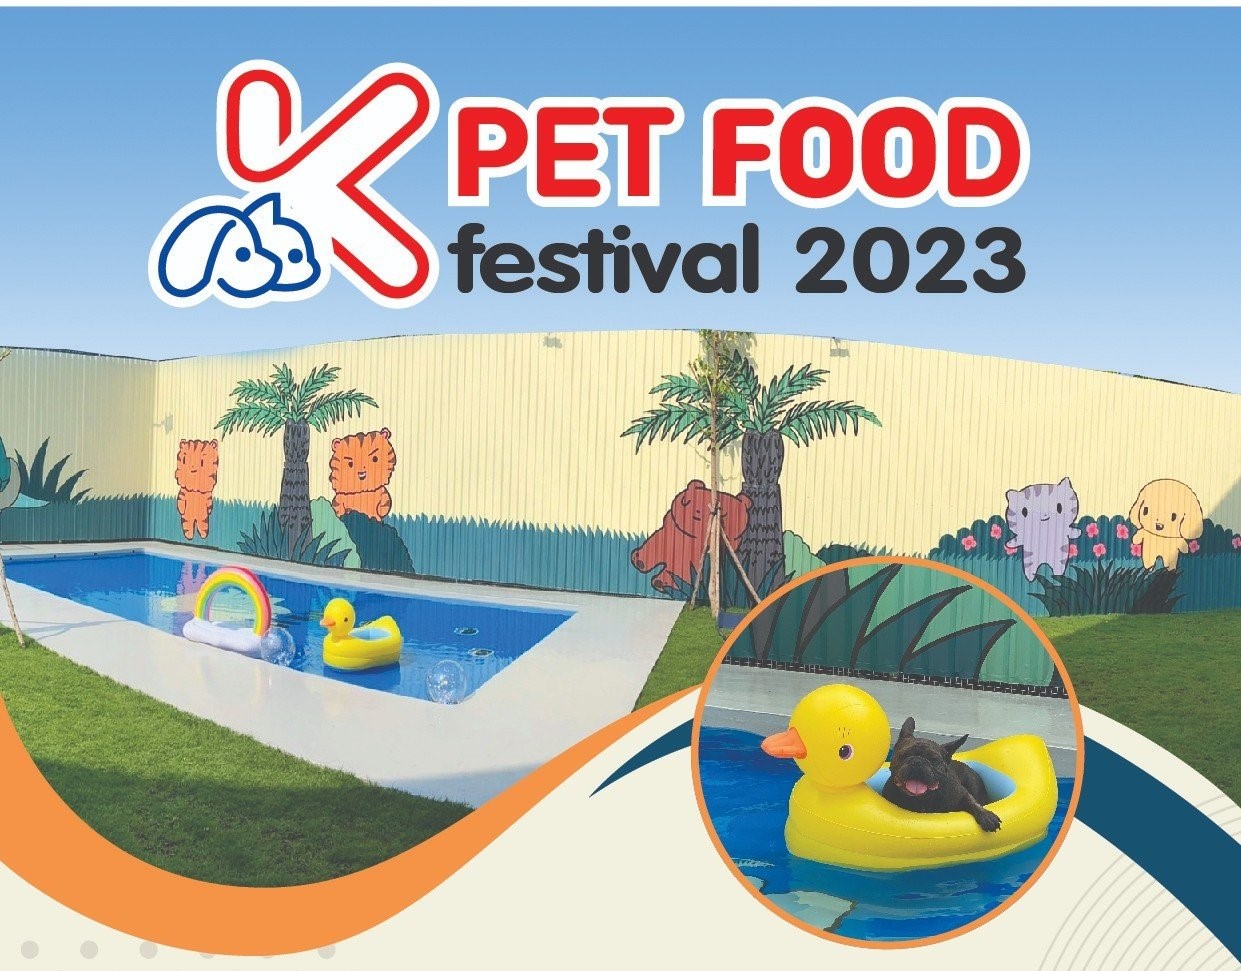 K-Pet Food Festival is coming to Vietnam